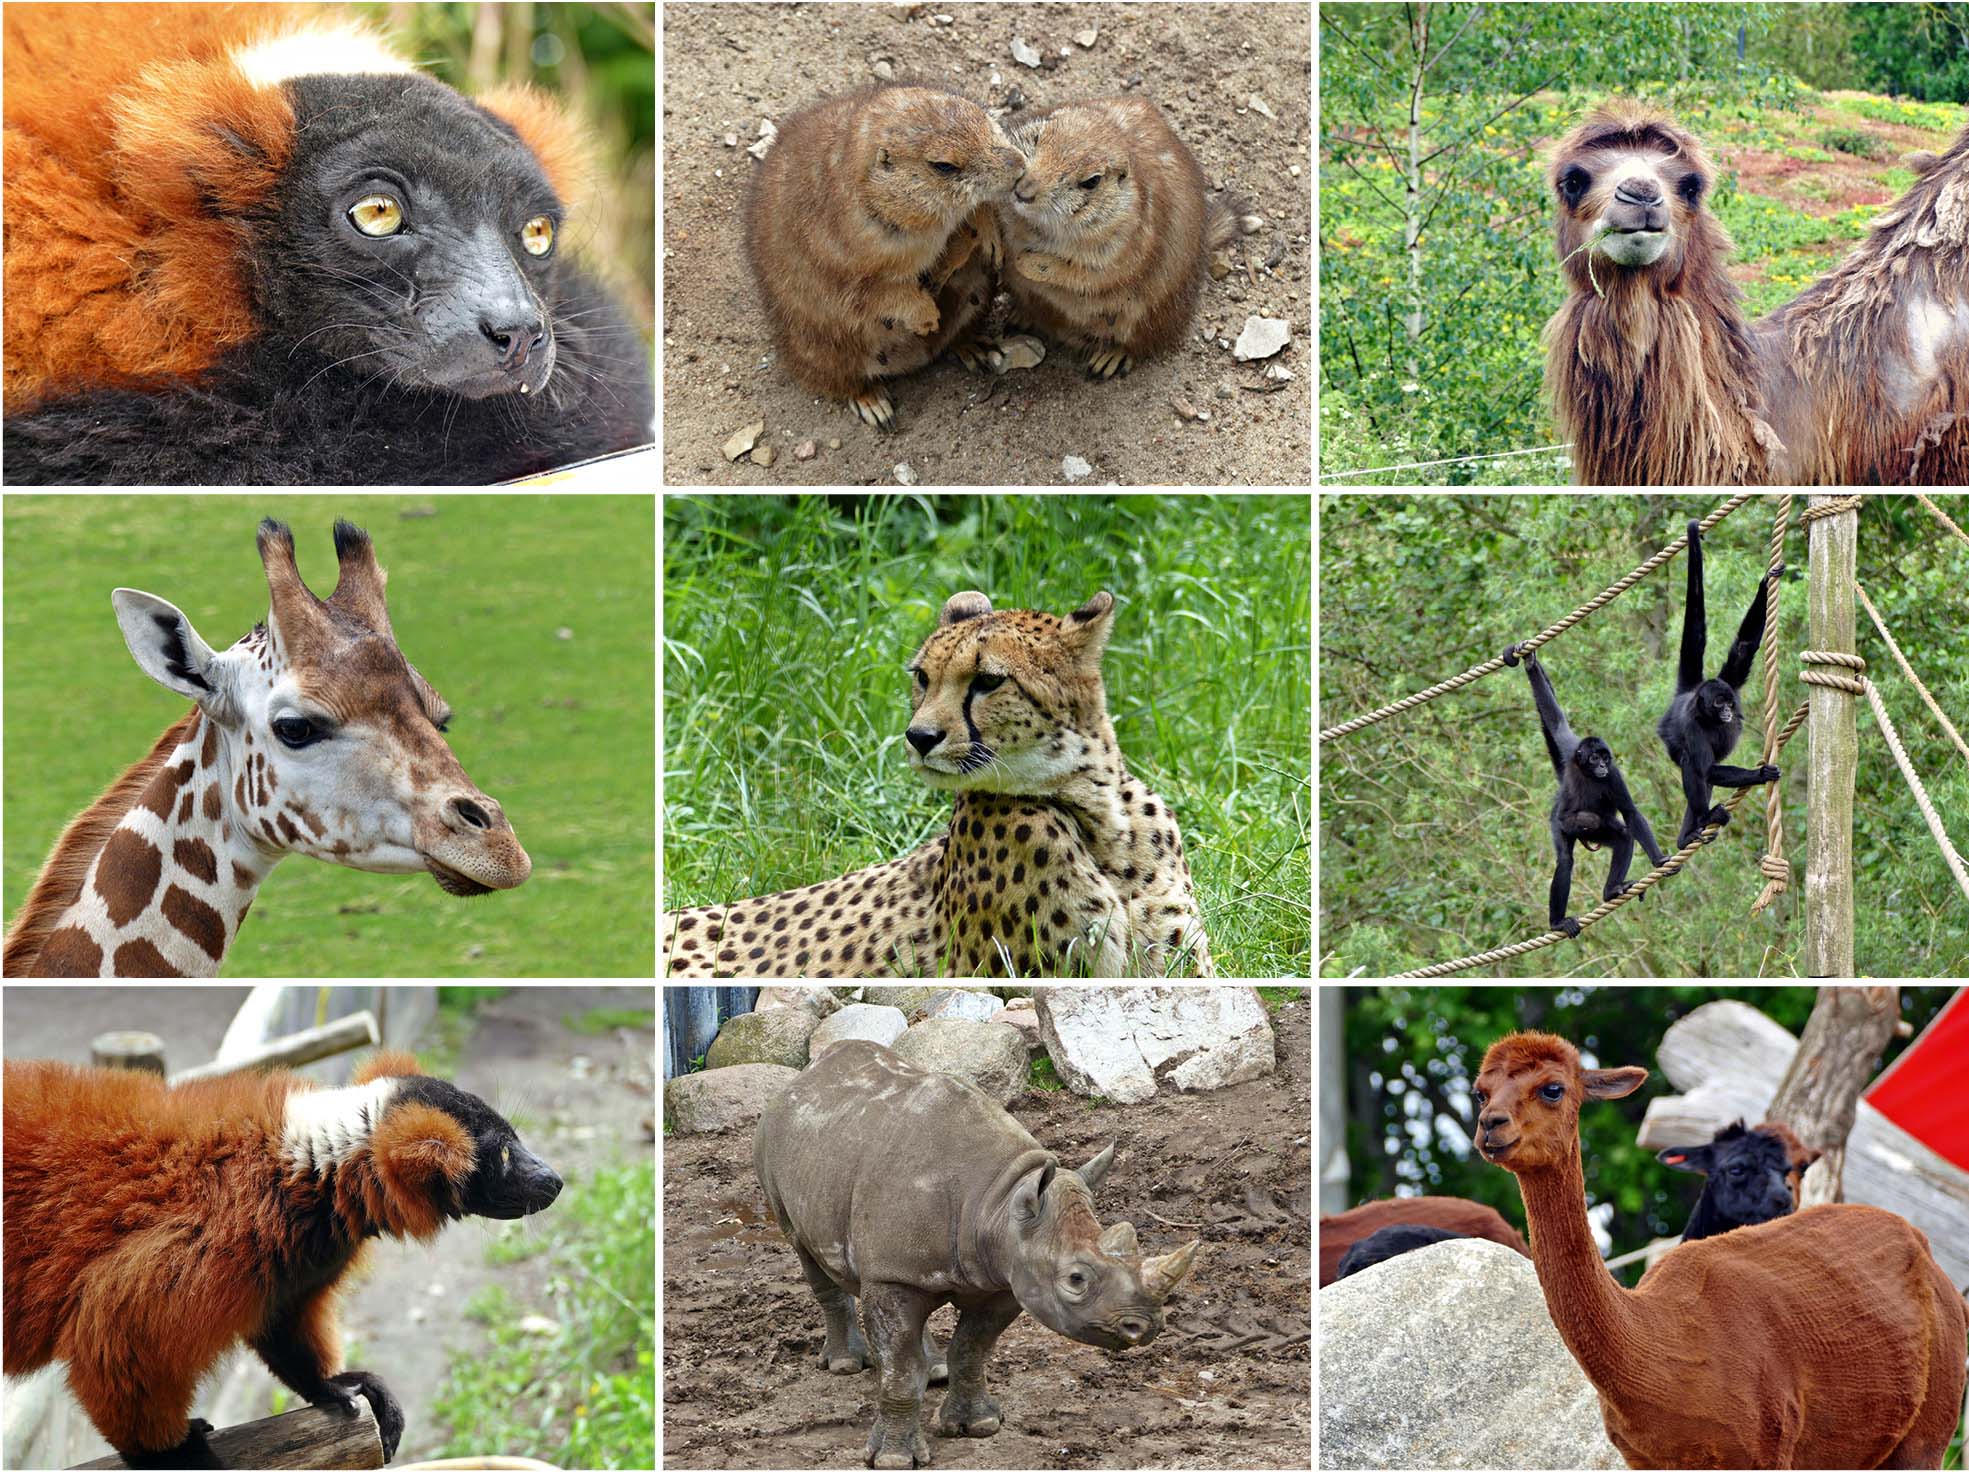 Danemark, Europe, Aarhus, voyage, nord, zoo, reef park safari, animaux, singe, léopard, jaguar, nature, végétation, lémurien, castor, girafe, babouin, chameau, rhinocéros, lama, alpaga